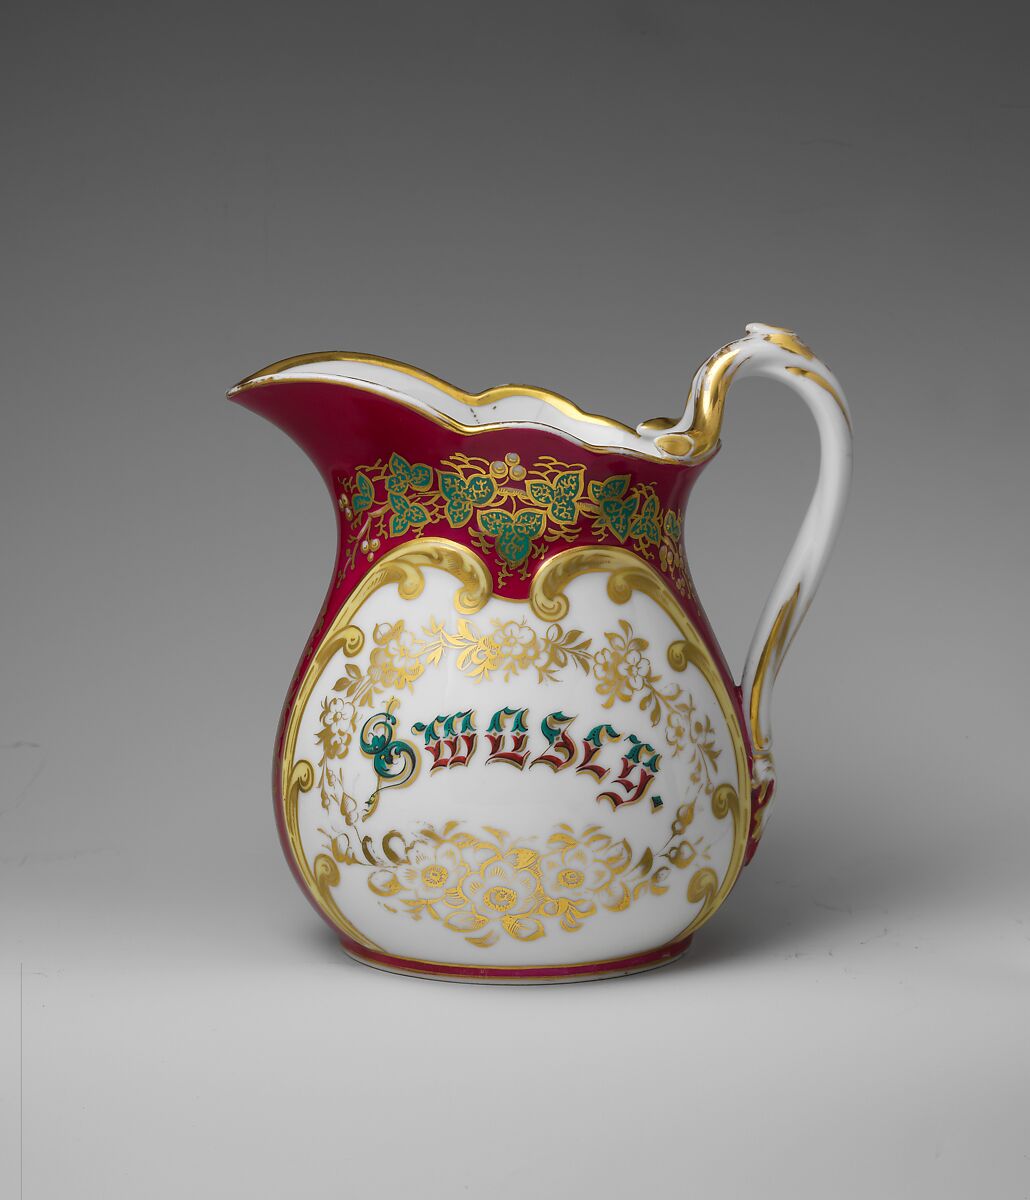 Pitcher, Boston China Decorating Works (1860–ca. 1925), Porcelain, overglaze enamel decoration, and gilding, American 